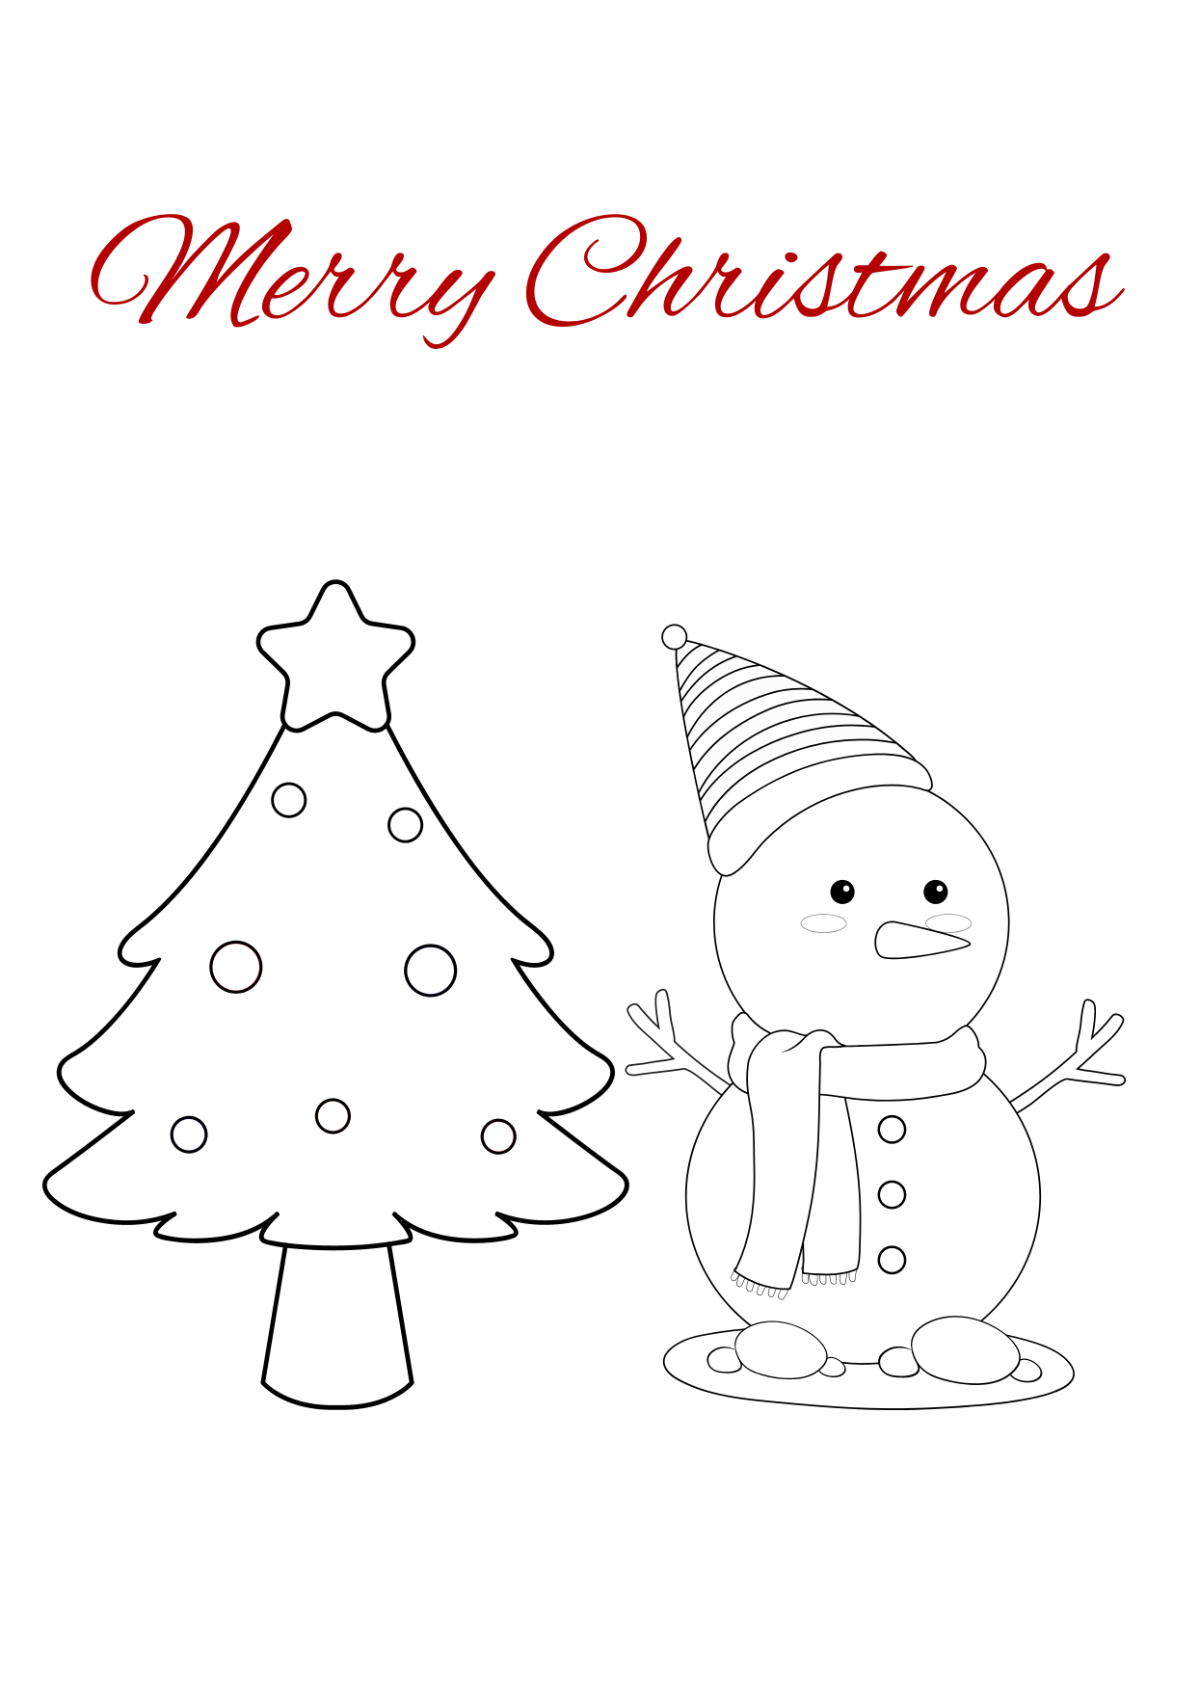 How to draw Santa Claus easy/Merry Christmas Poster drawing/ Christmas  drawing/ Santa Claus drawing | Merry christmas poster, Christmas drawing,  How to draw santa